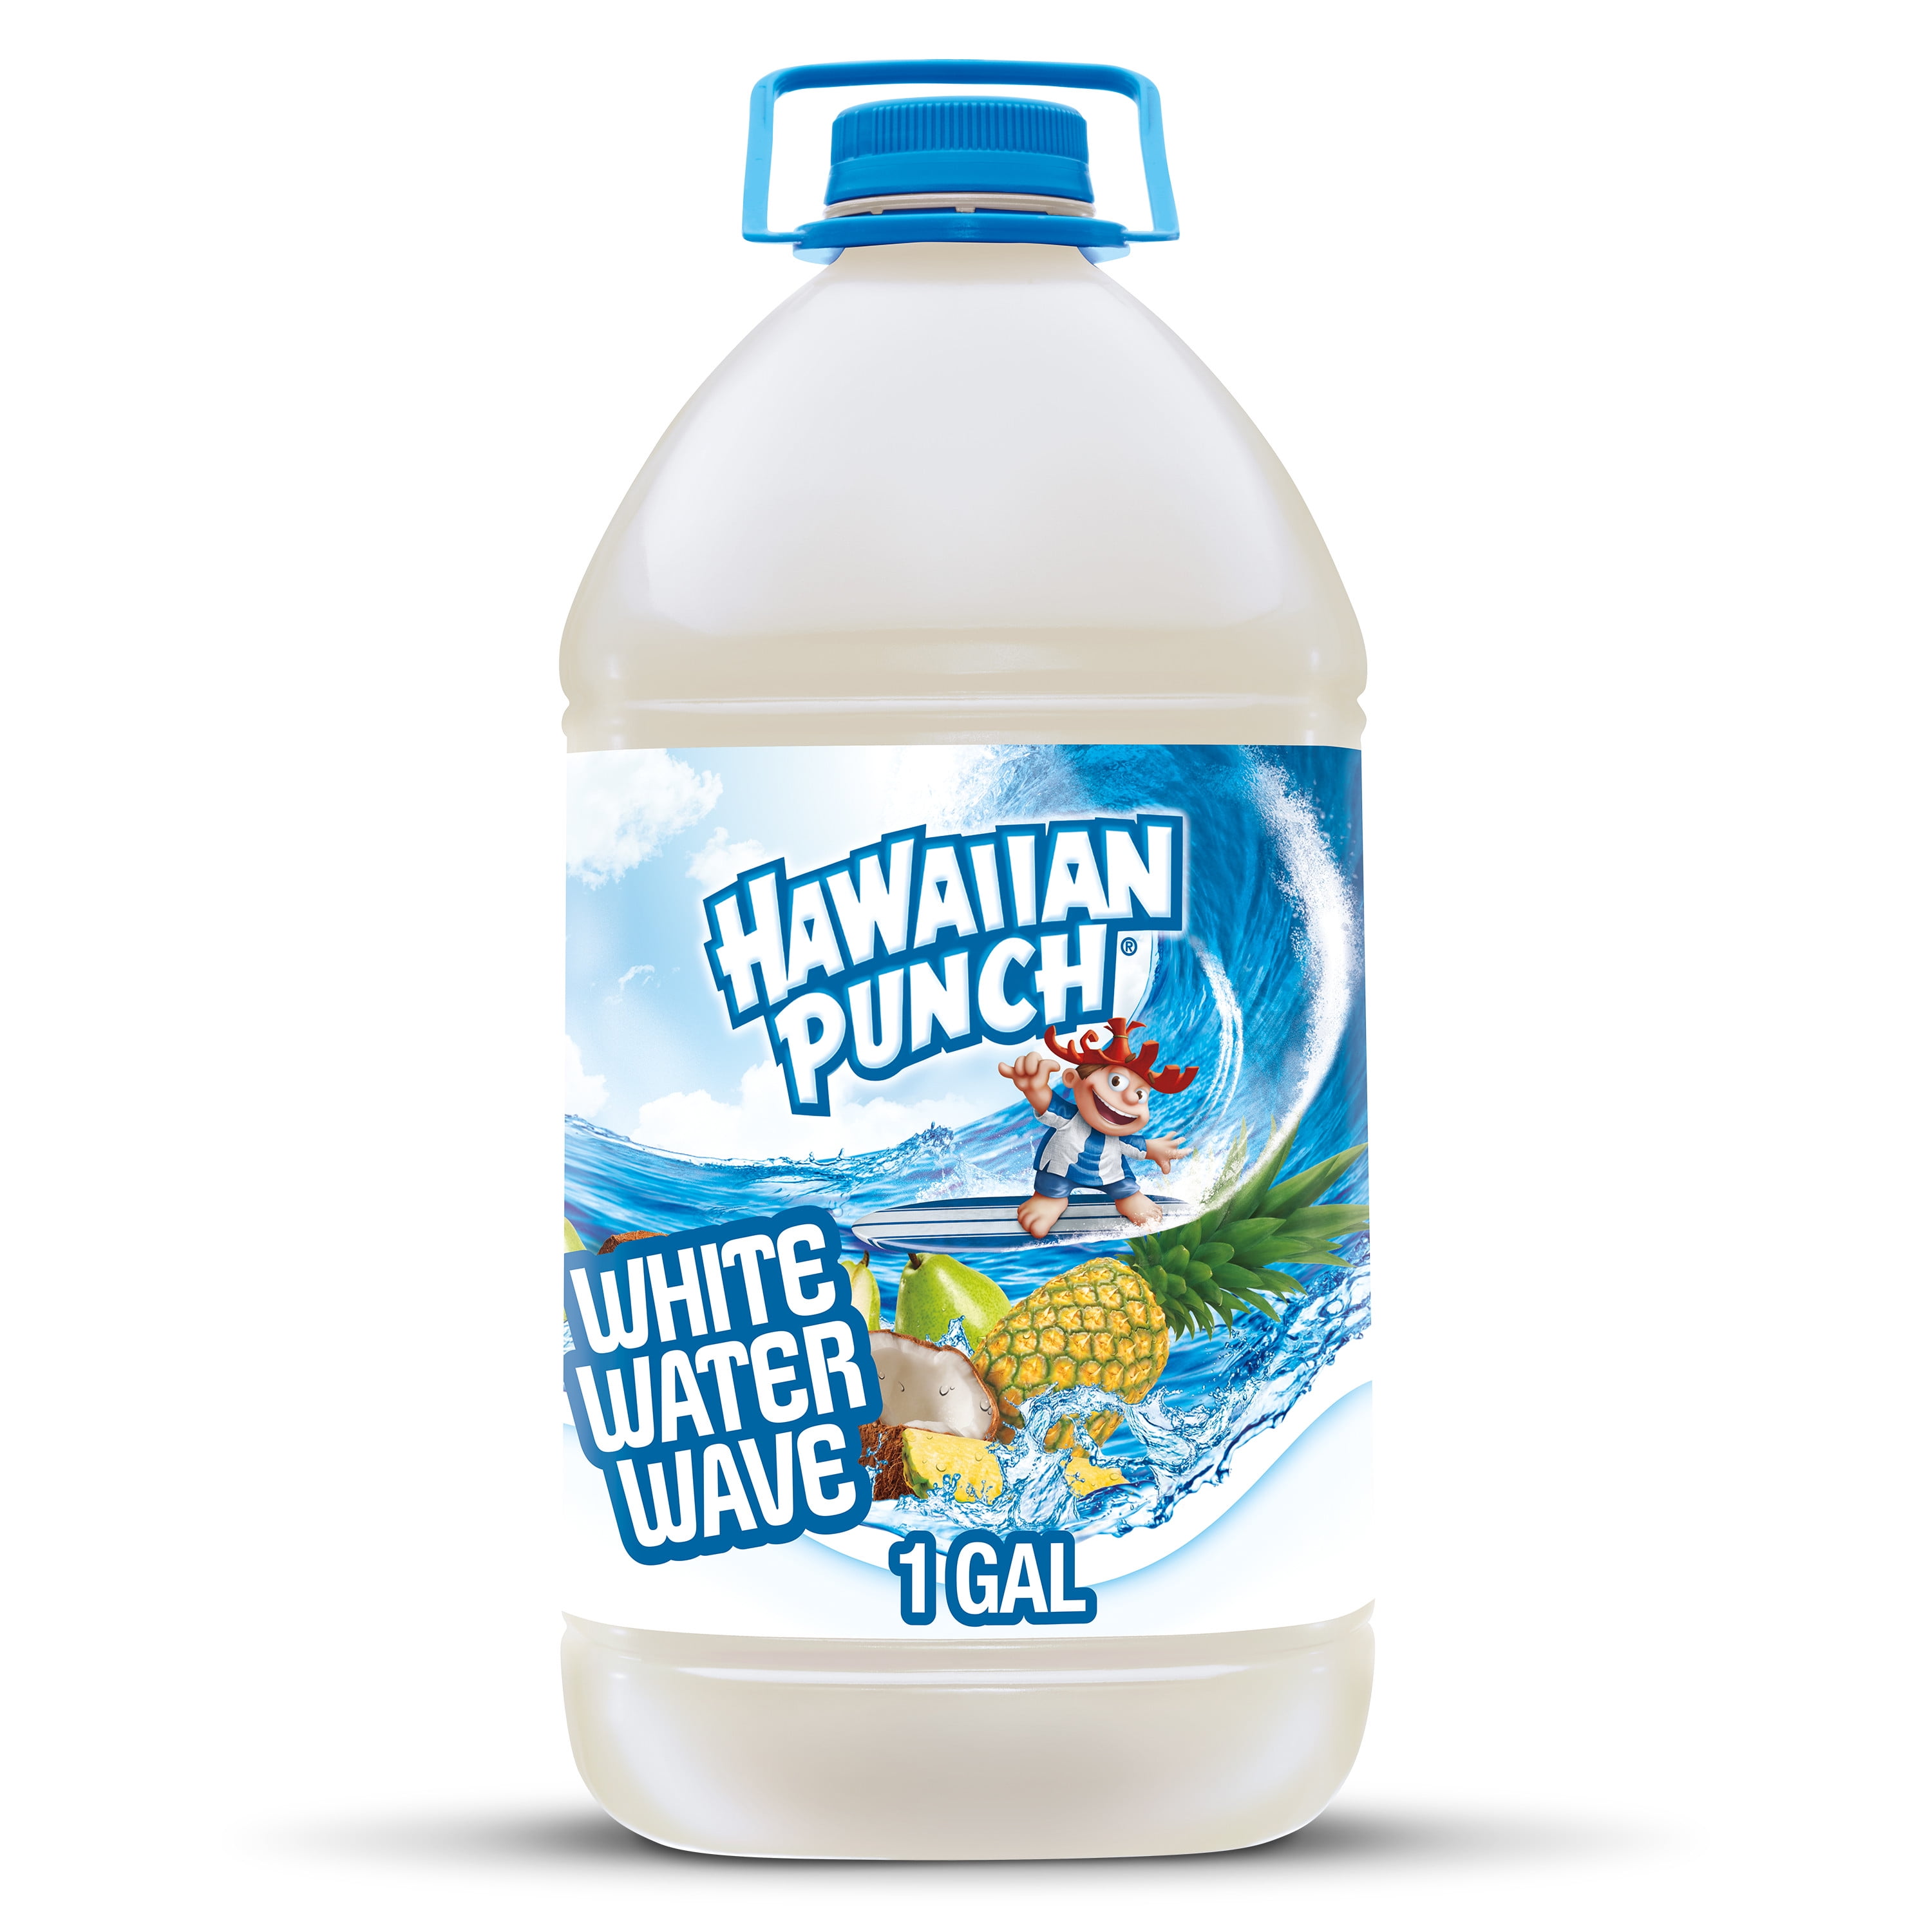 Hawaiian Punch Whitewater Wave, Juice Drink, 1 gal bottle